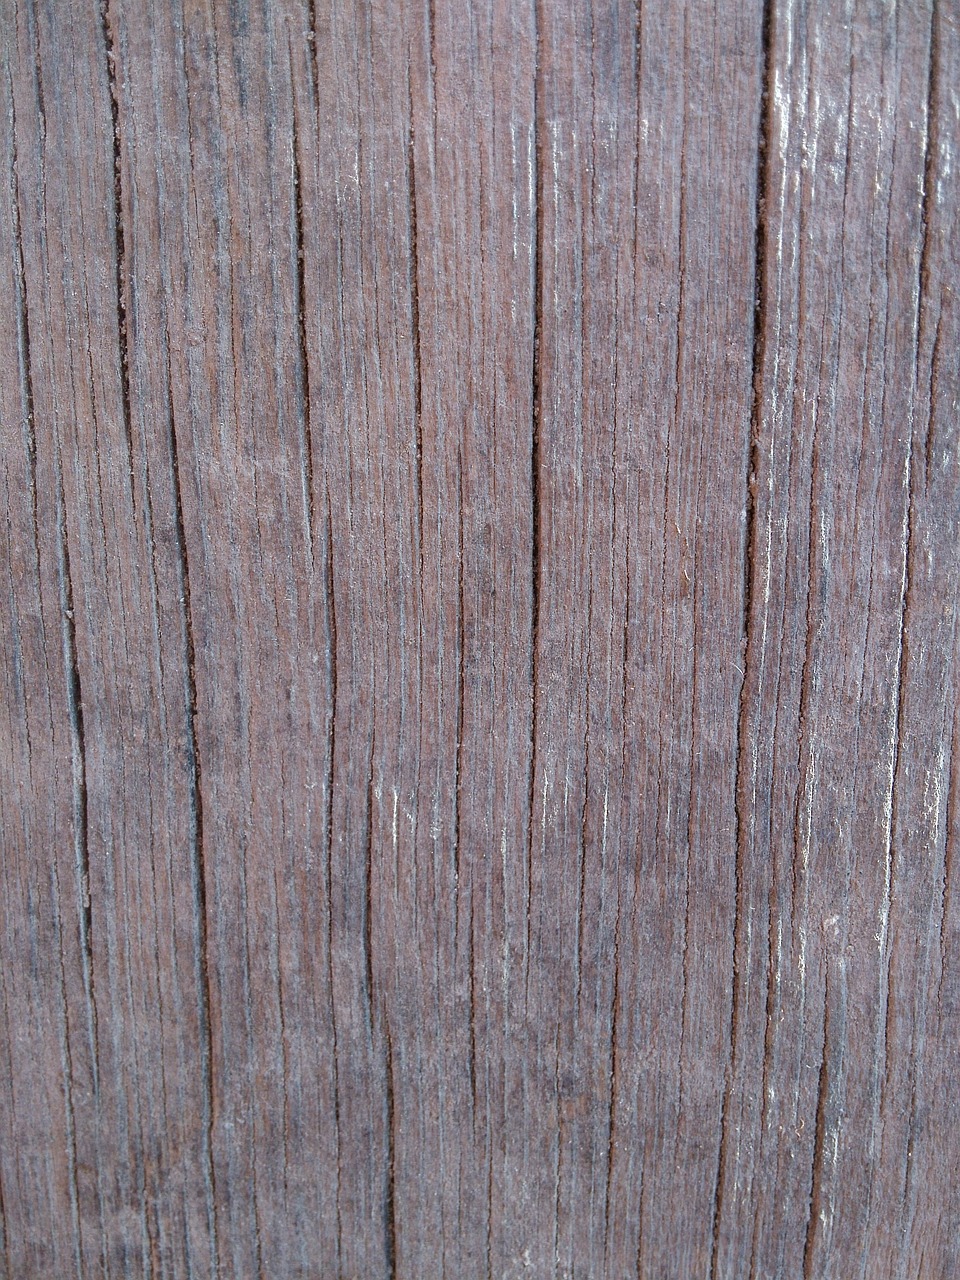 texture wood tree free photo